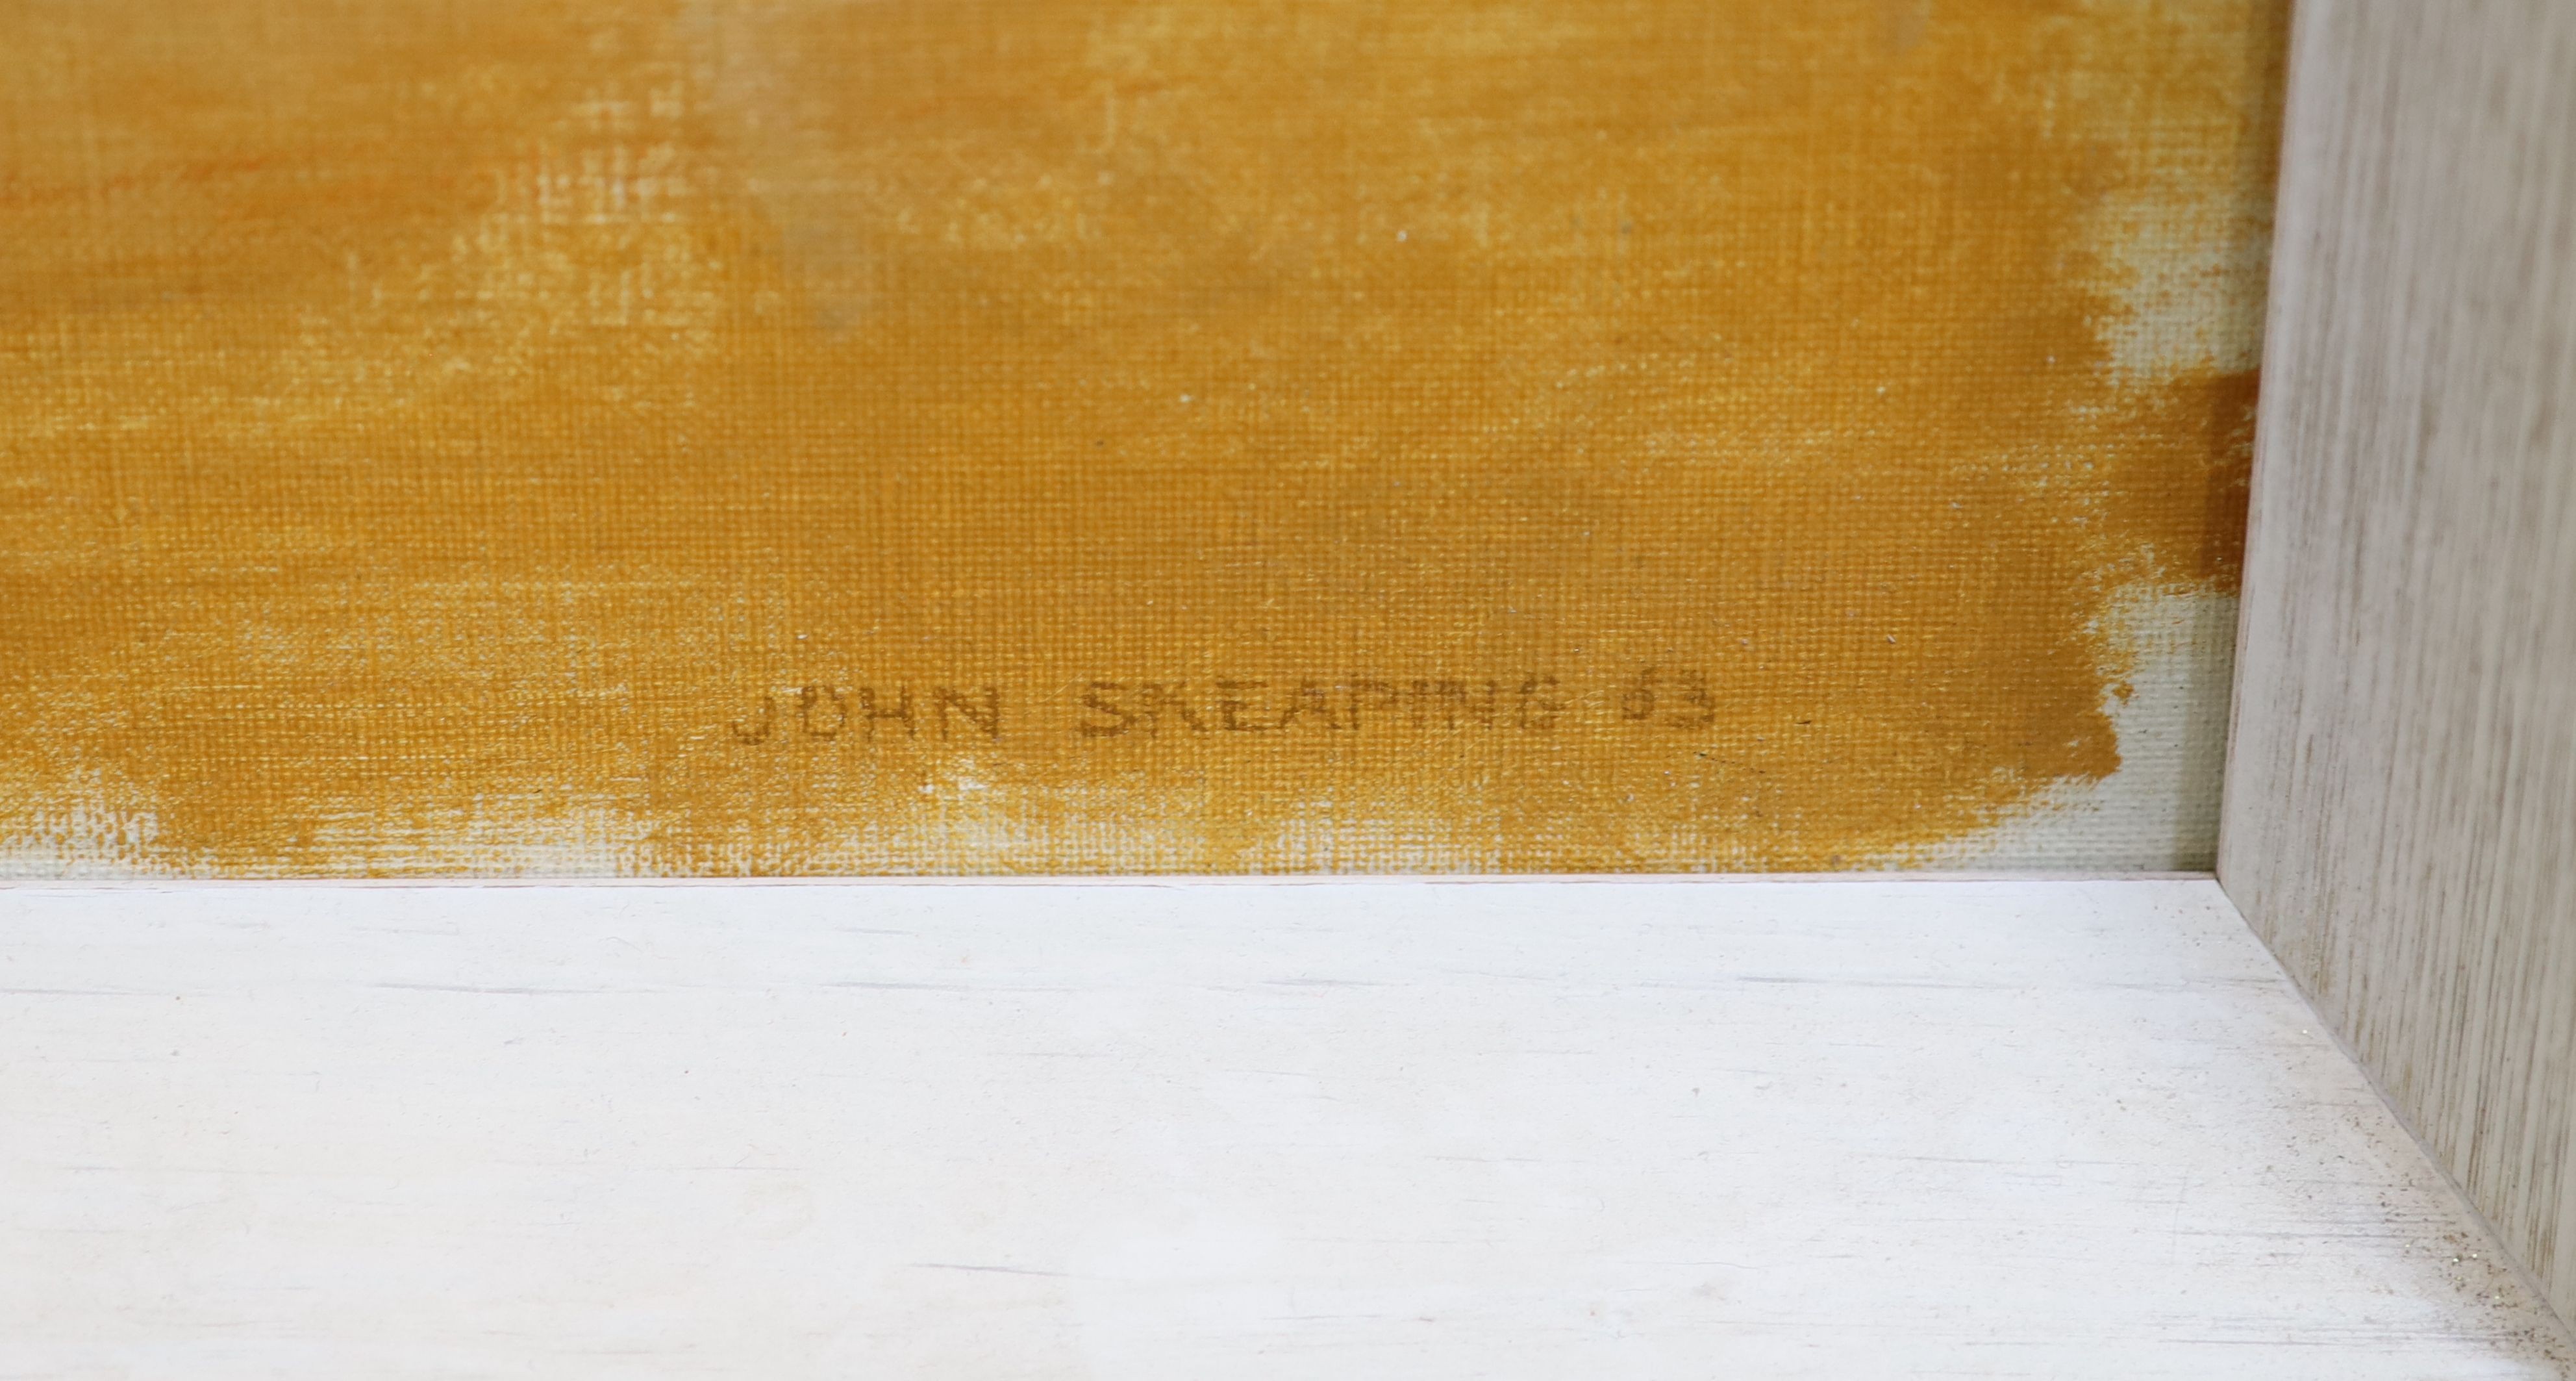 John Rattenbury Skeaping (1901-1980), 'Greyhounds racing', oil on canvas, 45 x 64cm